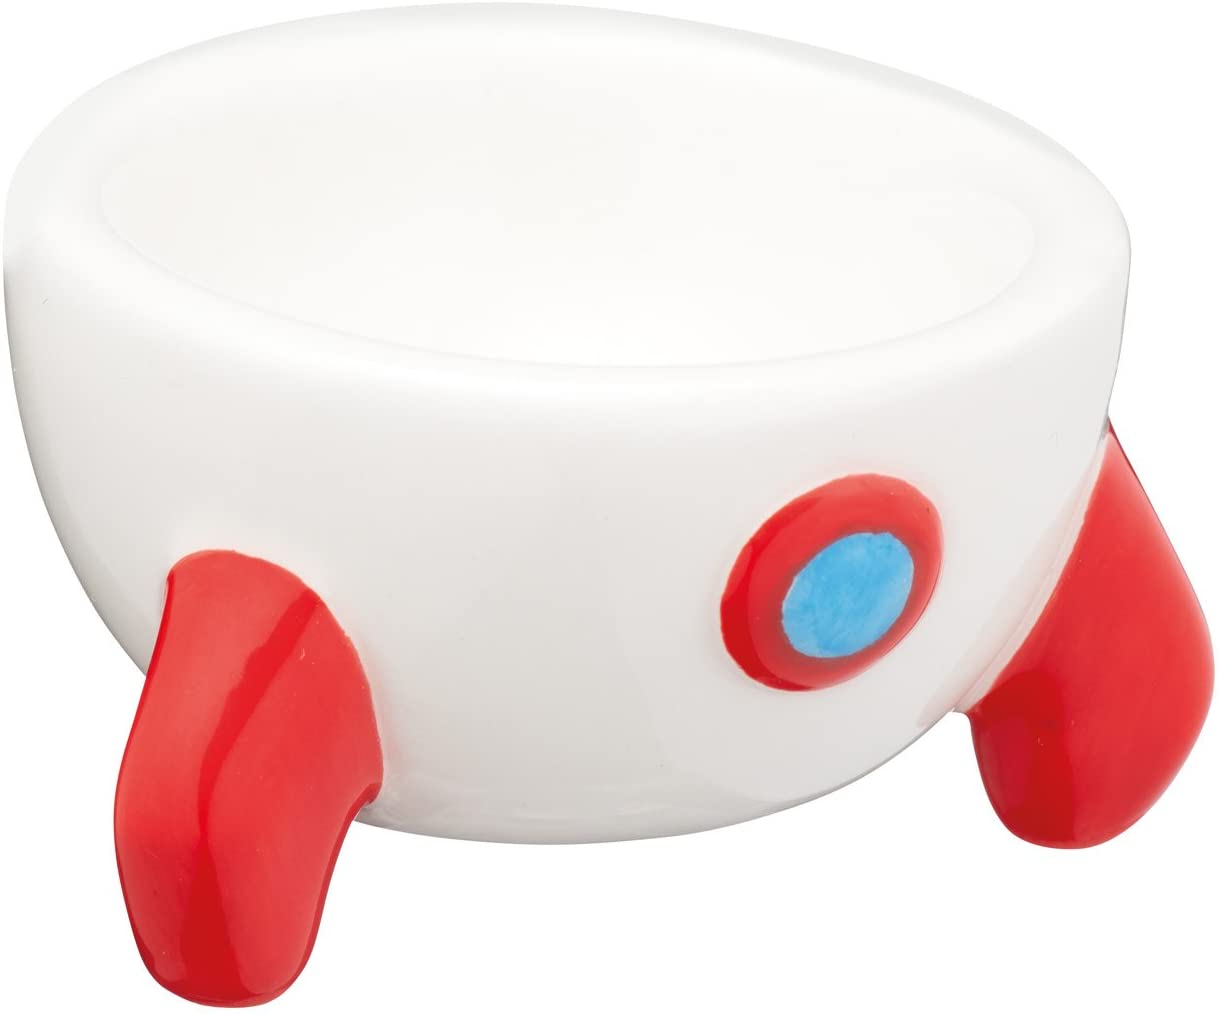 KitchenCraft 6 x 6 x 3.5 cm Ceramic Rocket Egg Cup, White/Red